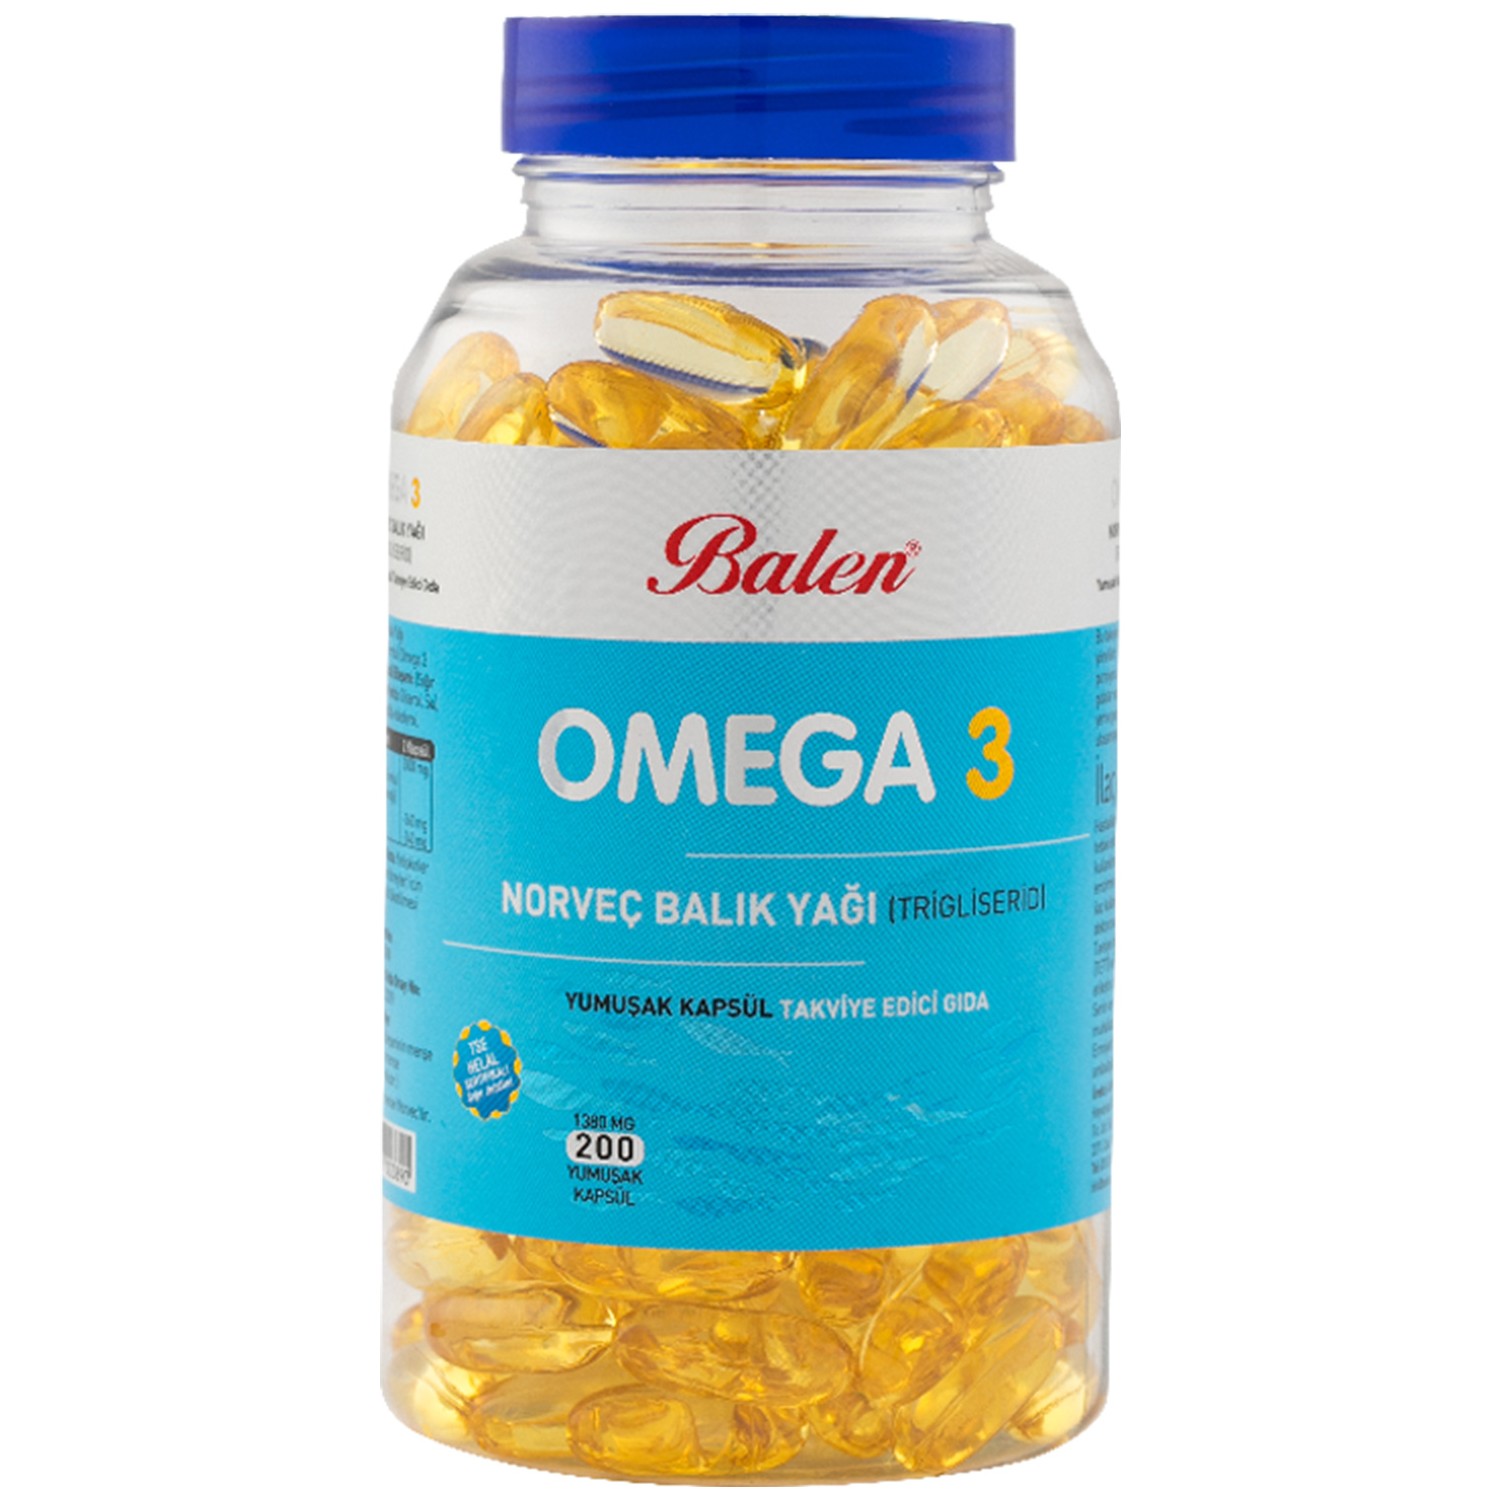 Норвежский рыбий жир Balen Omega-3 (триглицерид) 1380 мг, 200 капсул рыбий жир balen omega 3 1380мг 200 капсул 3шт